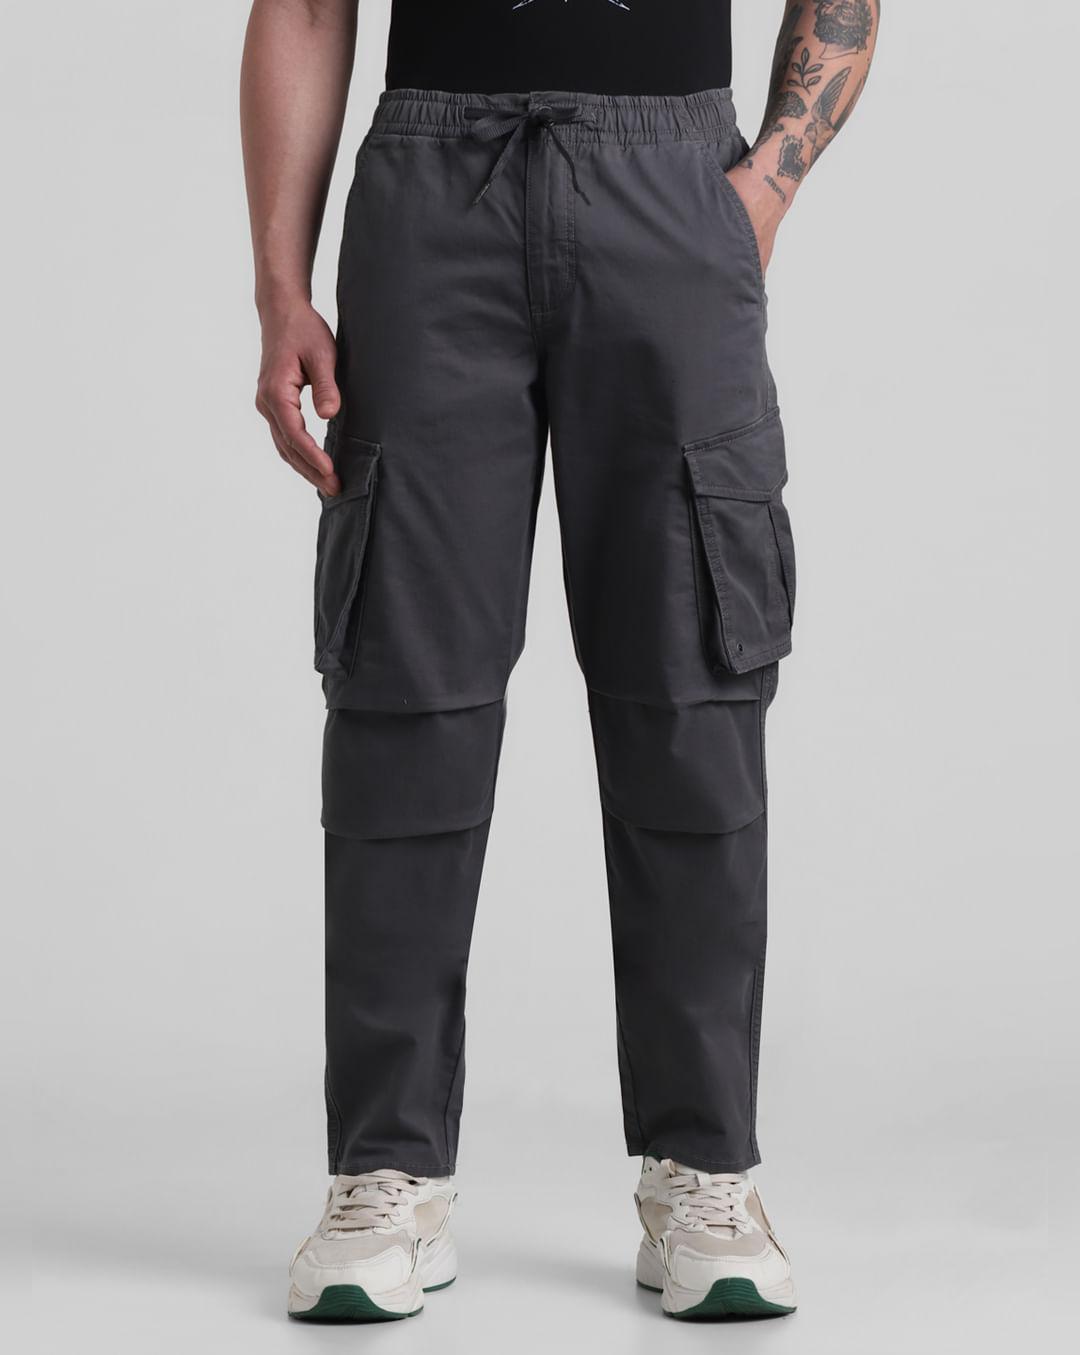 grey mid rise cargo pants